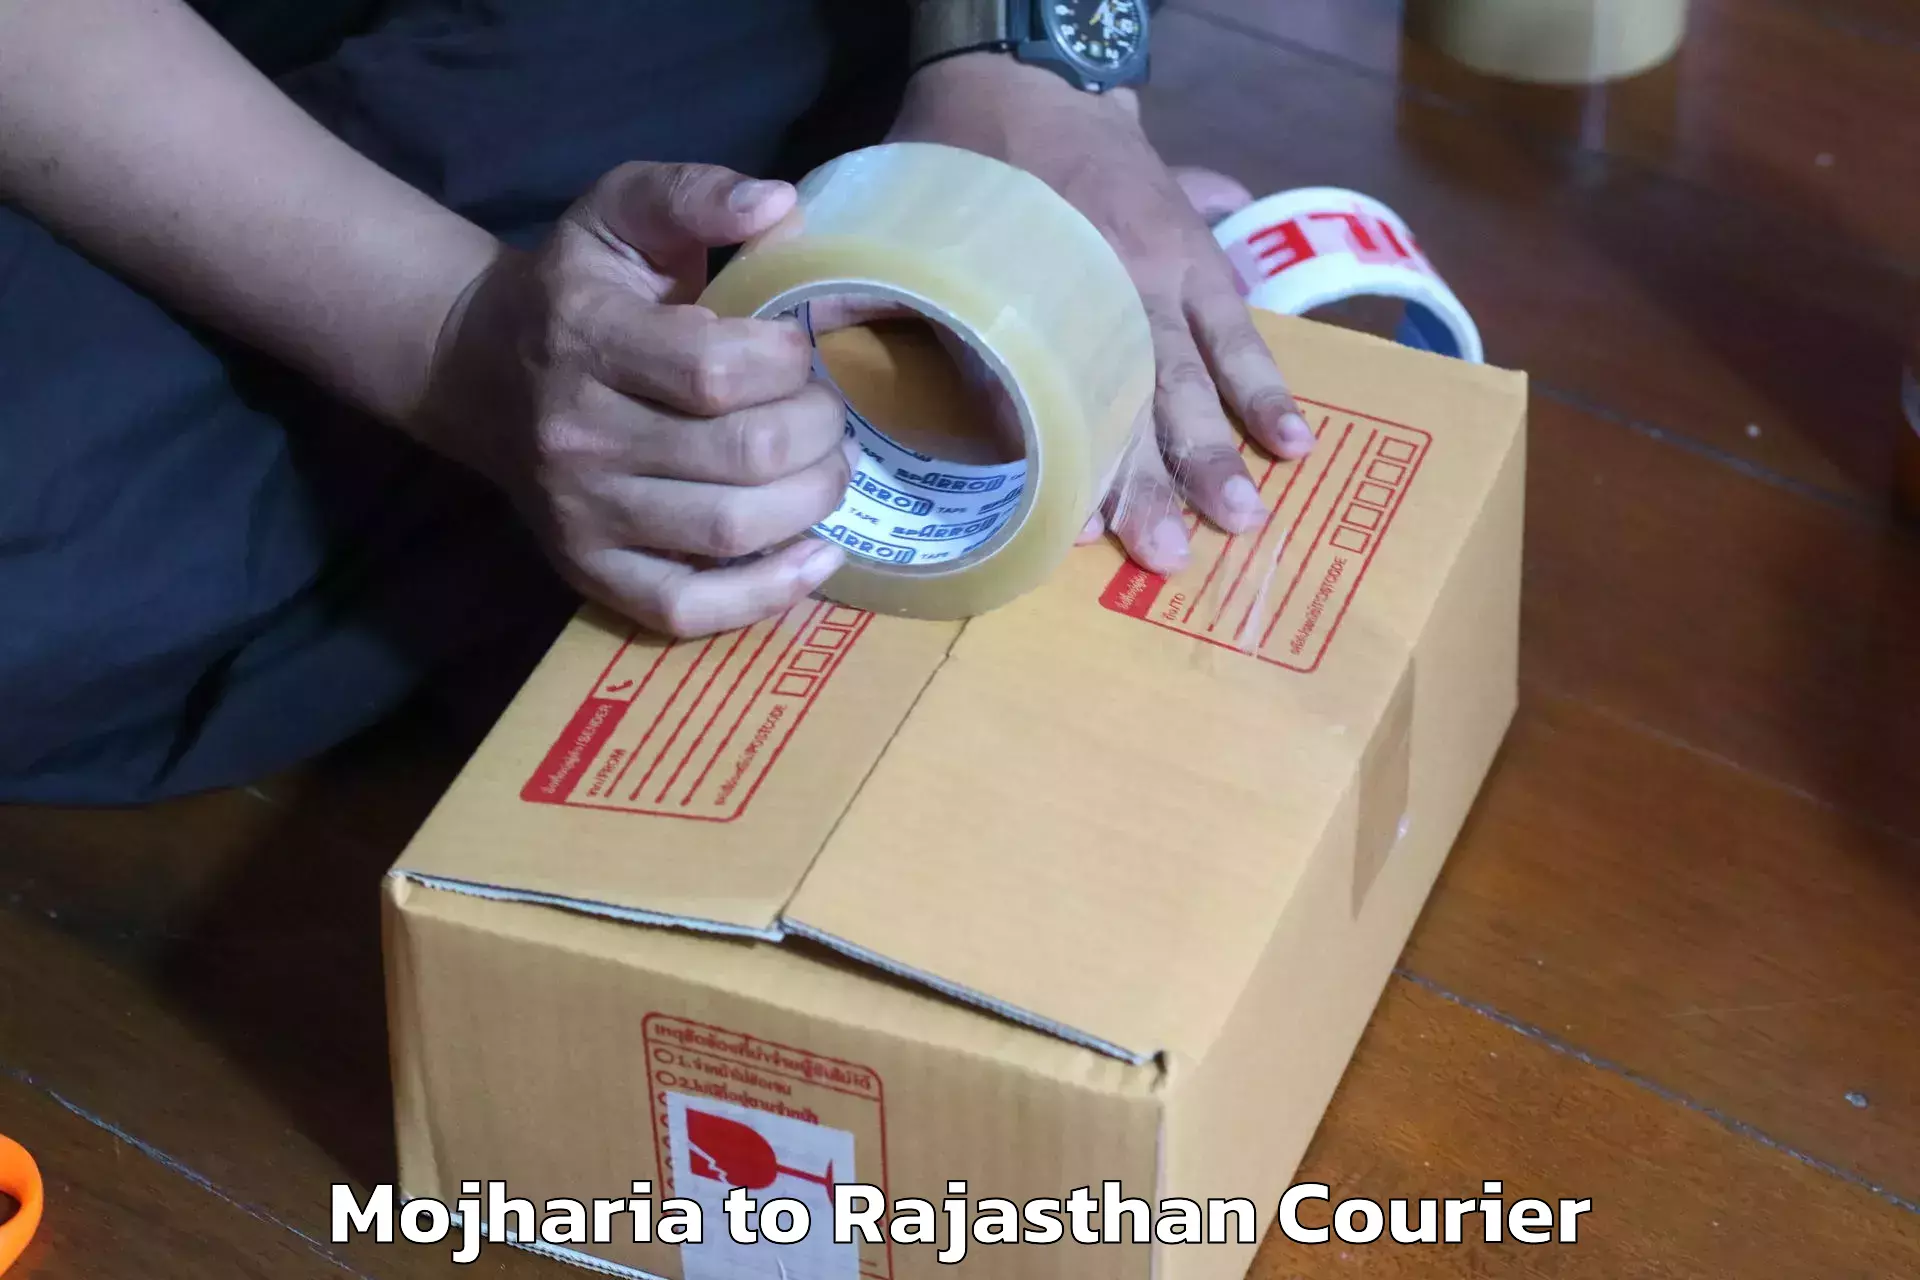 Professional movers Mojharia to Jodhpur